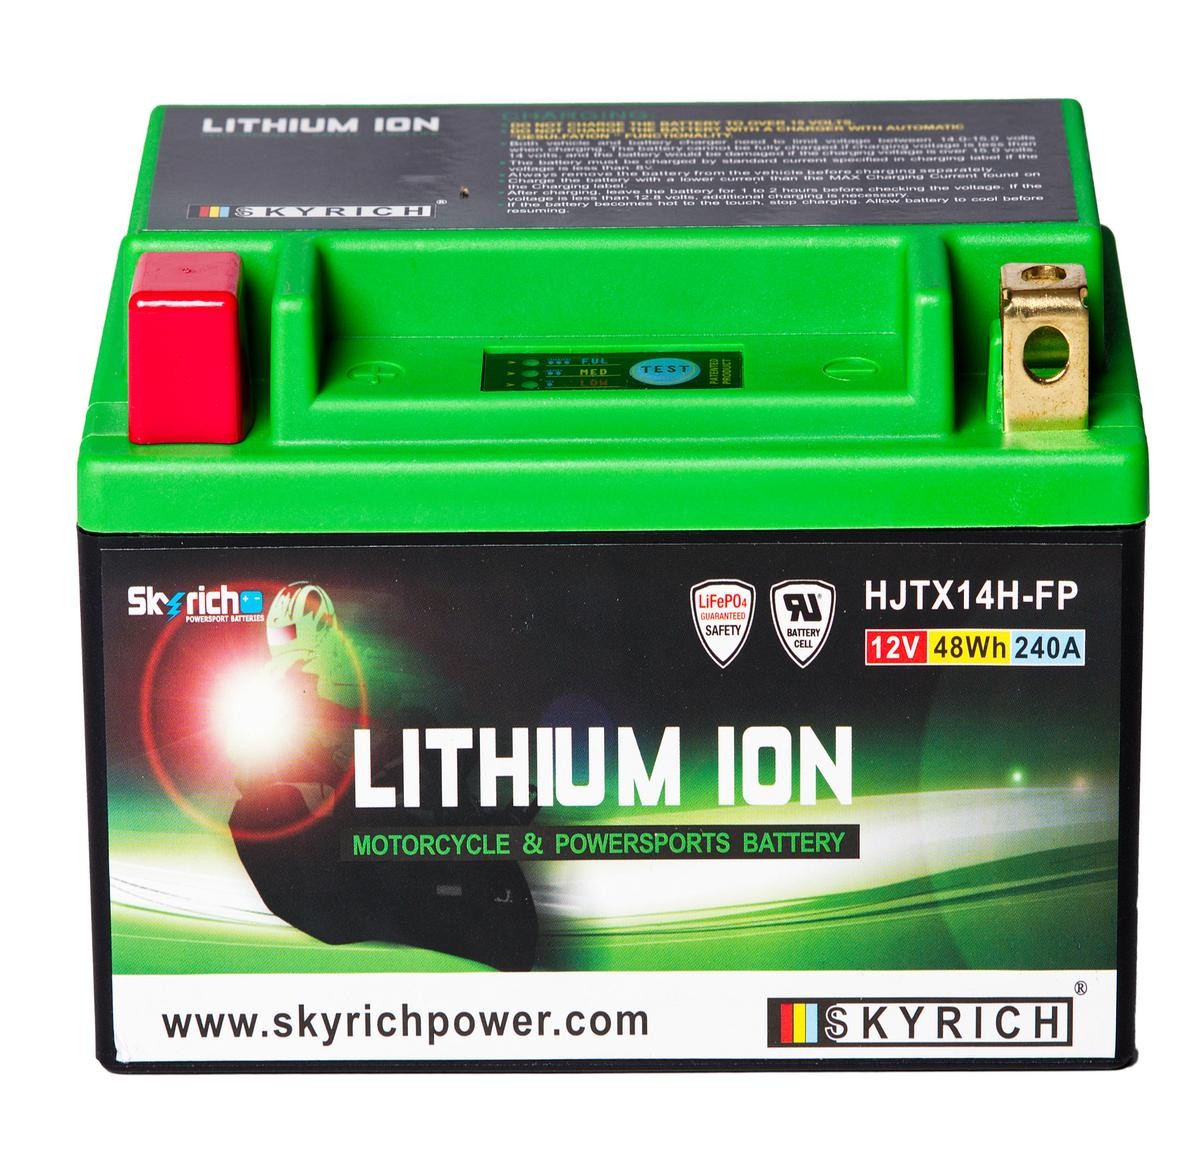 SKYRICH LITHIUM ION Batterie 12V 4Ah 240A N Li-Ionen-Batterie HJTX14H-FP HARLEY-DAVIDSON Mofa Maxi-Scooter